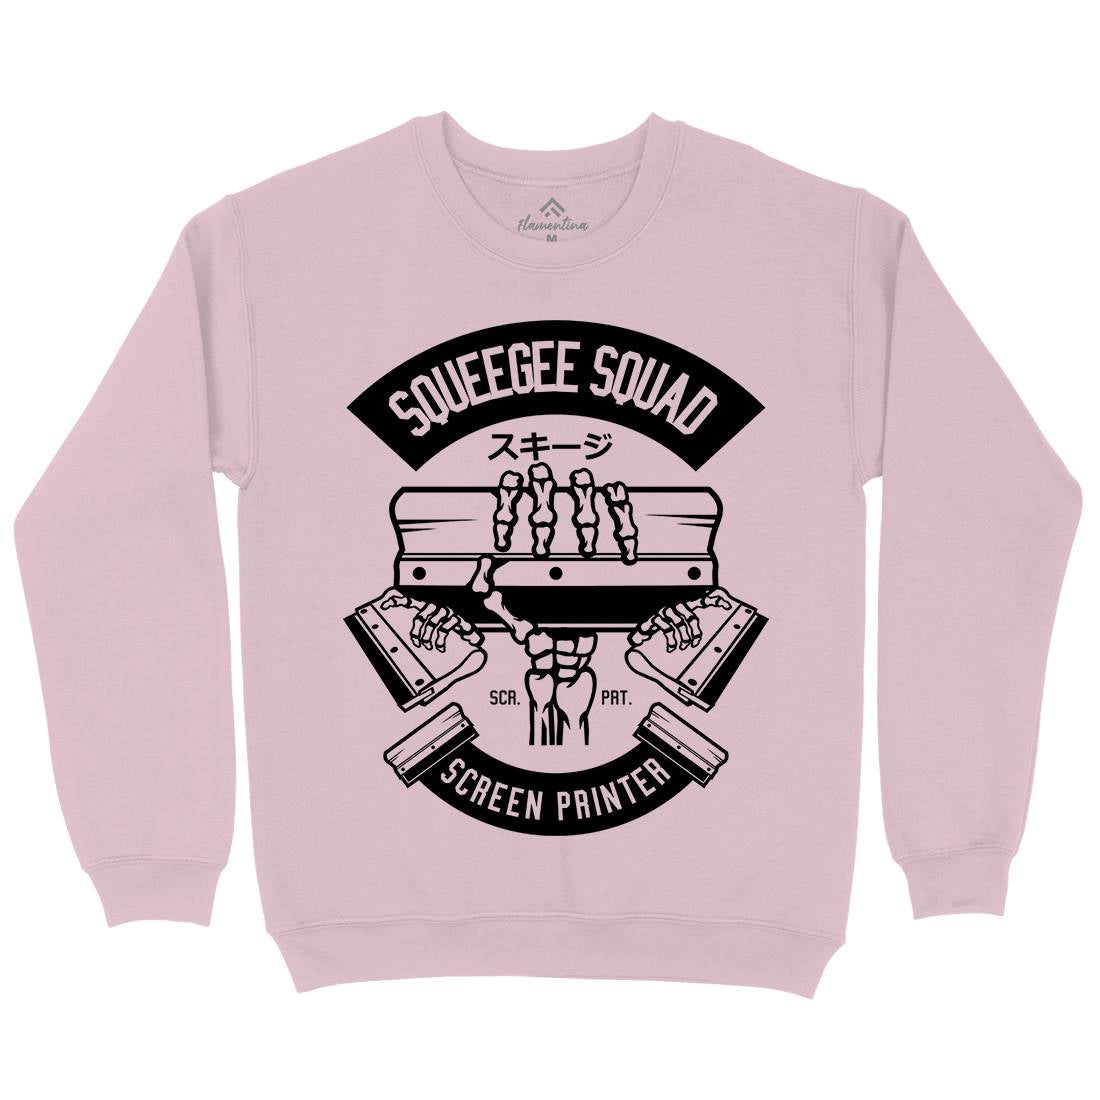 Squeegee Squad Kids Crew Neck Sweatshirt Retro B642